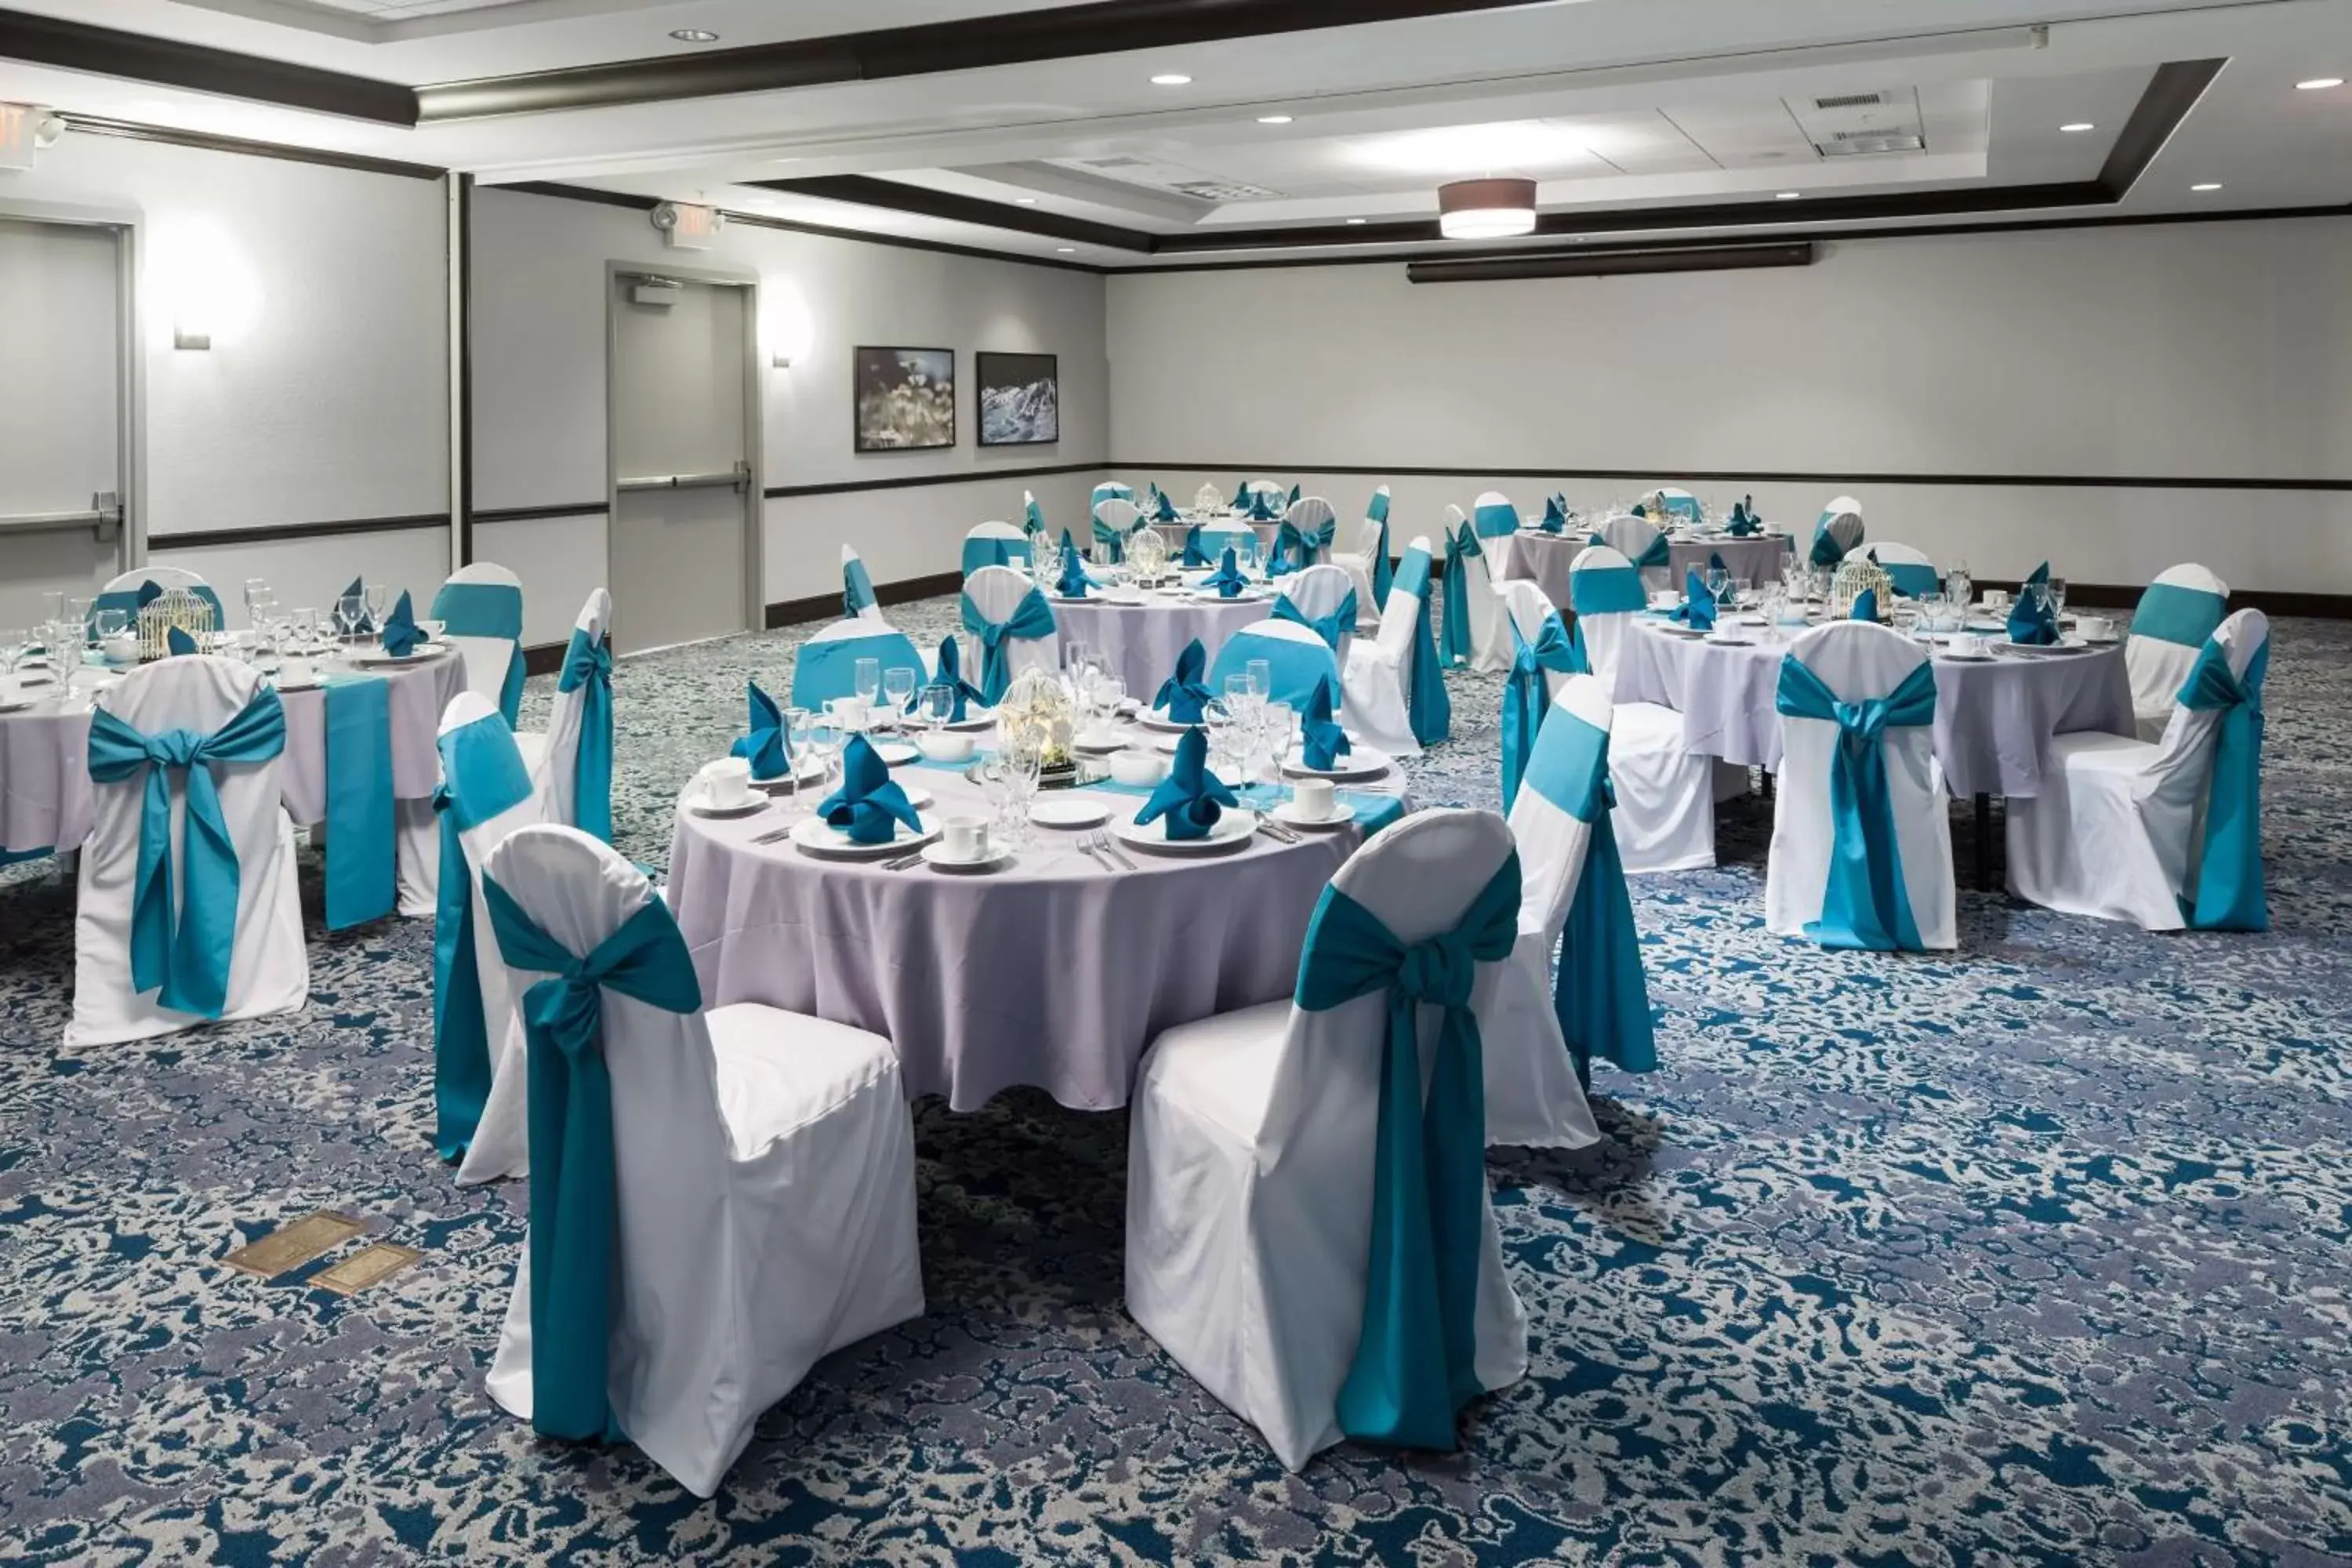 Meeting/conference room, Banquet Facilities in Hilton Garden Inn Cincinnati/Mason